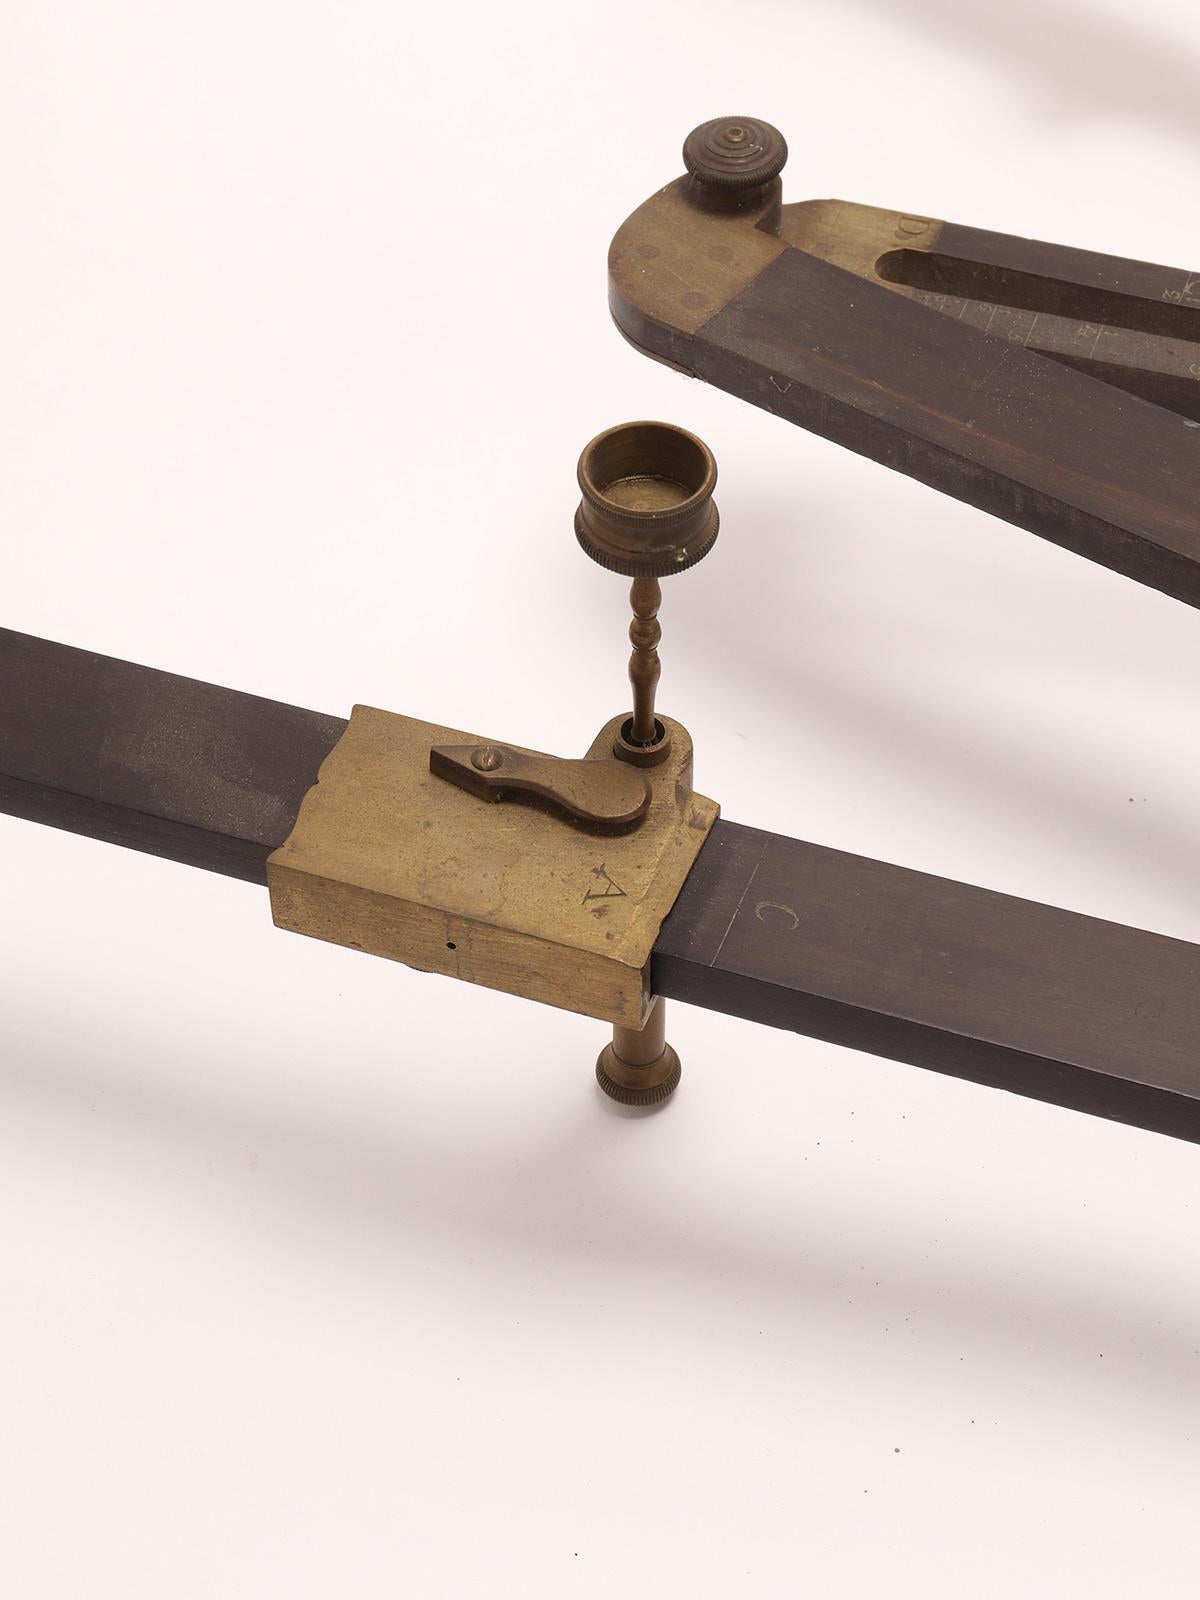 Brass and ebony pantograph, in its original mahogany box. Bone wheels. The instrument shows the signature of the maker Lennel à La Sphére à Paris. France, 1780.